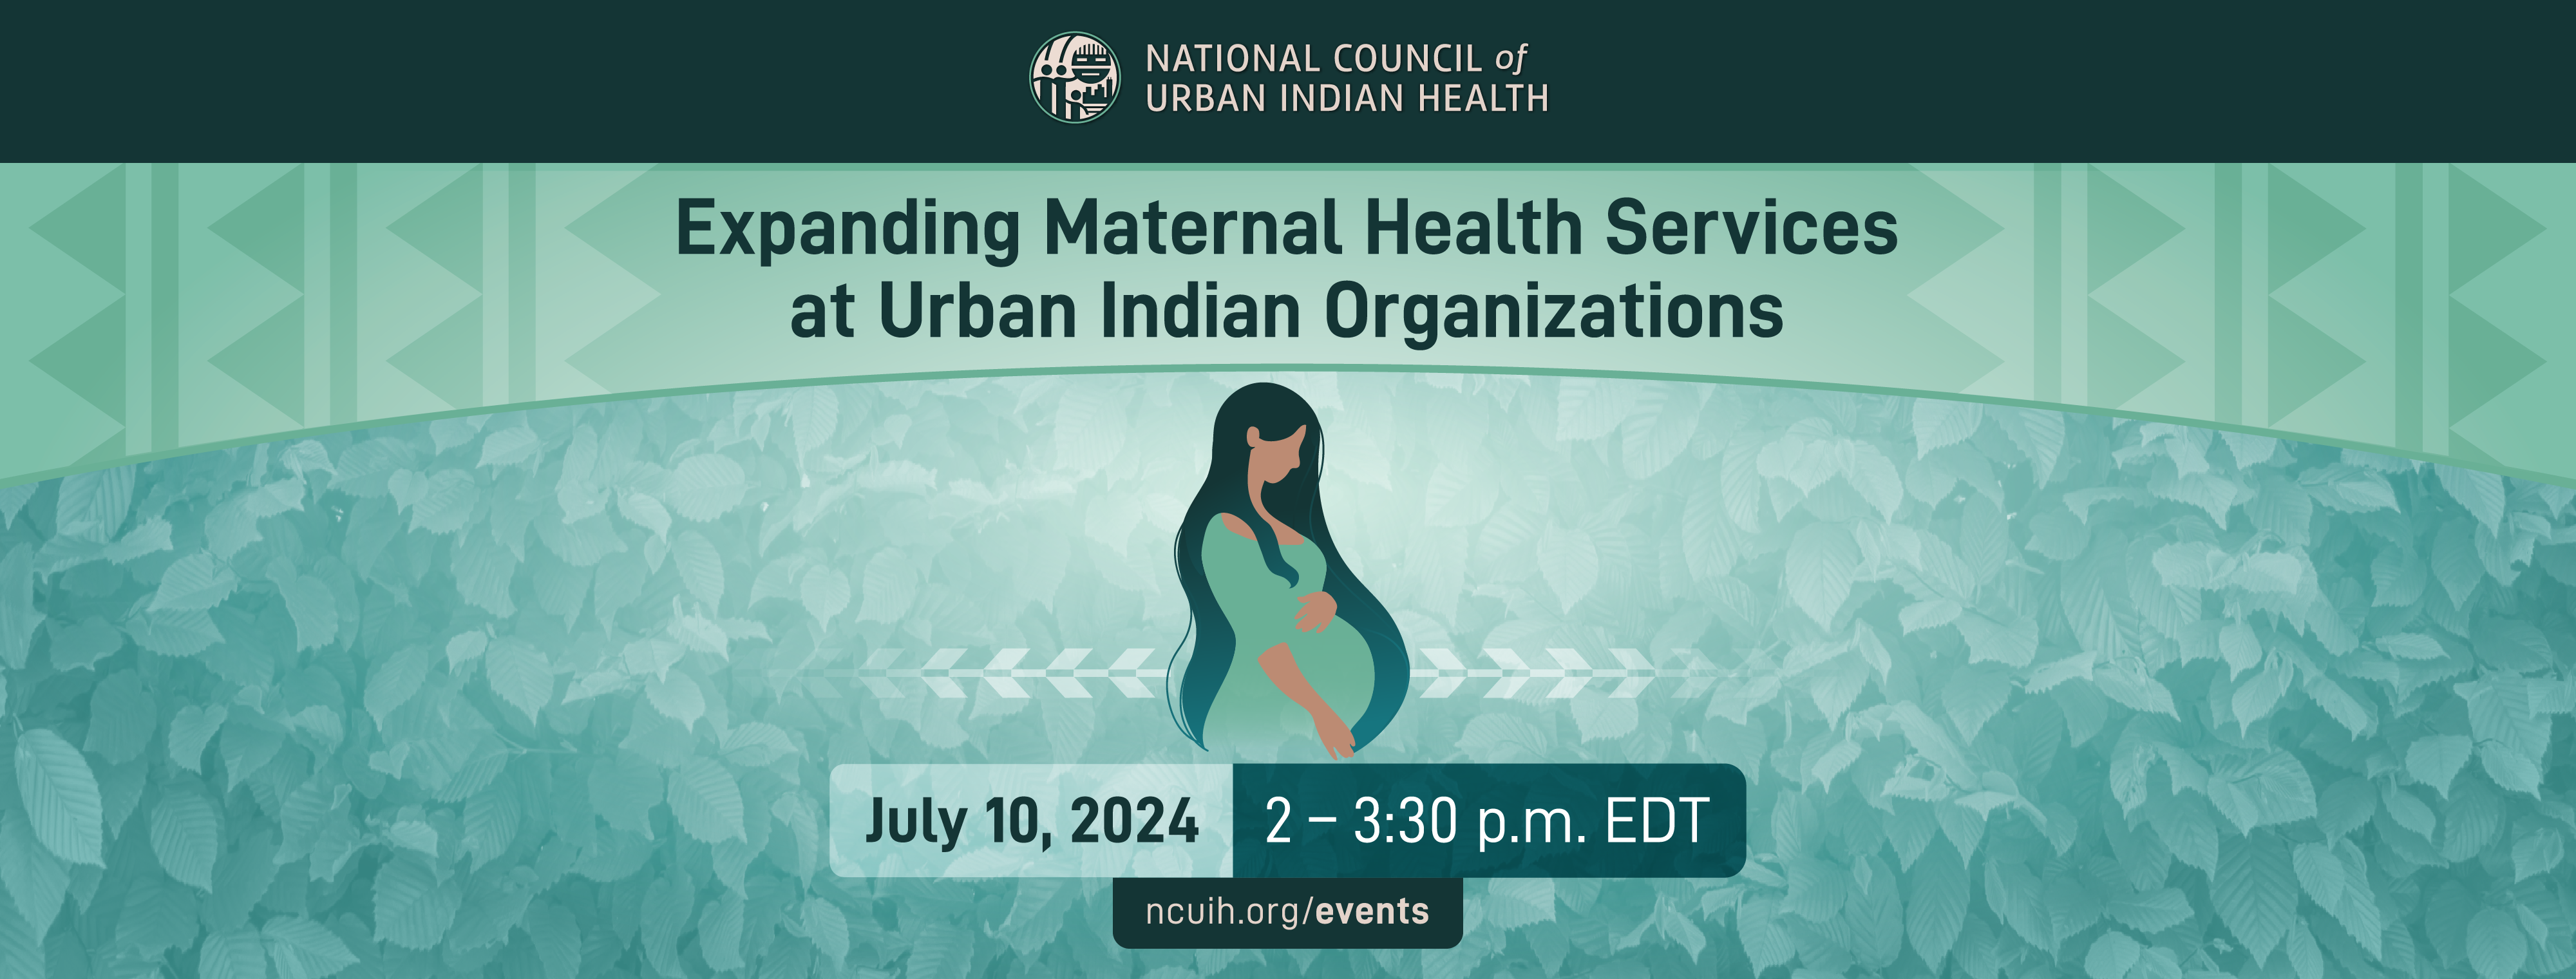 Expanding Maternal Health Services at Urban Indian Organizations